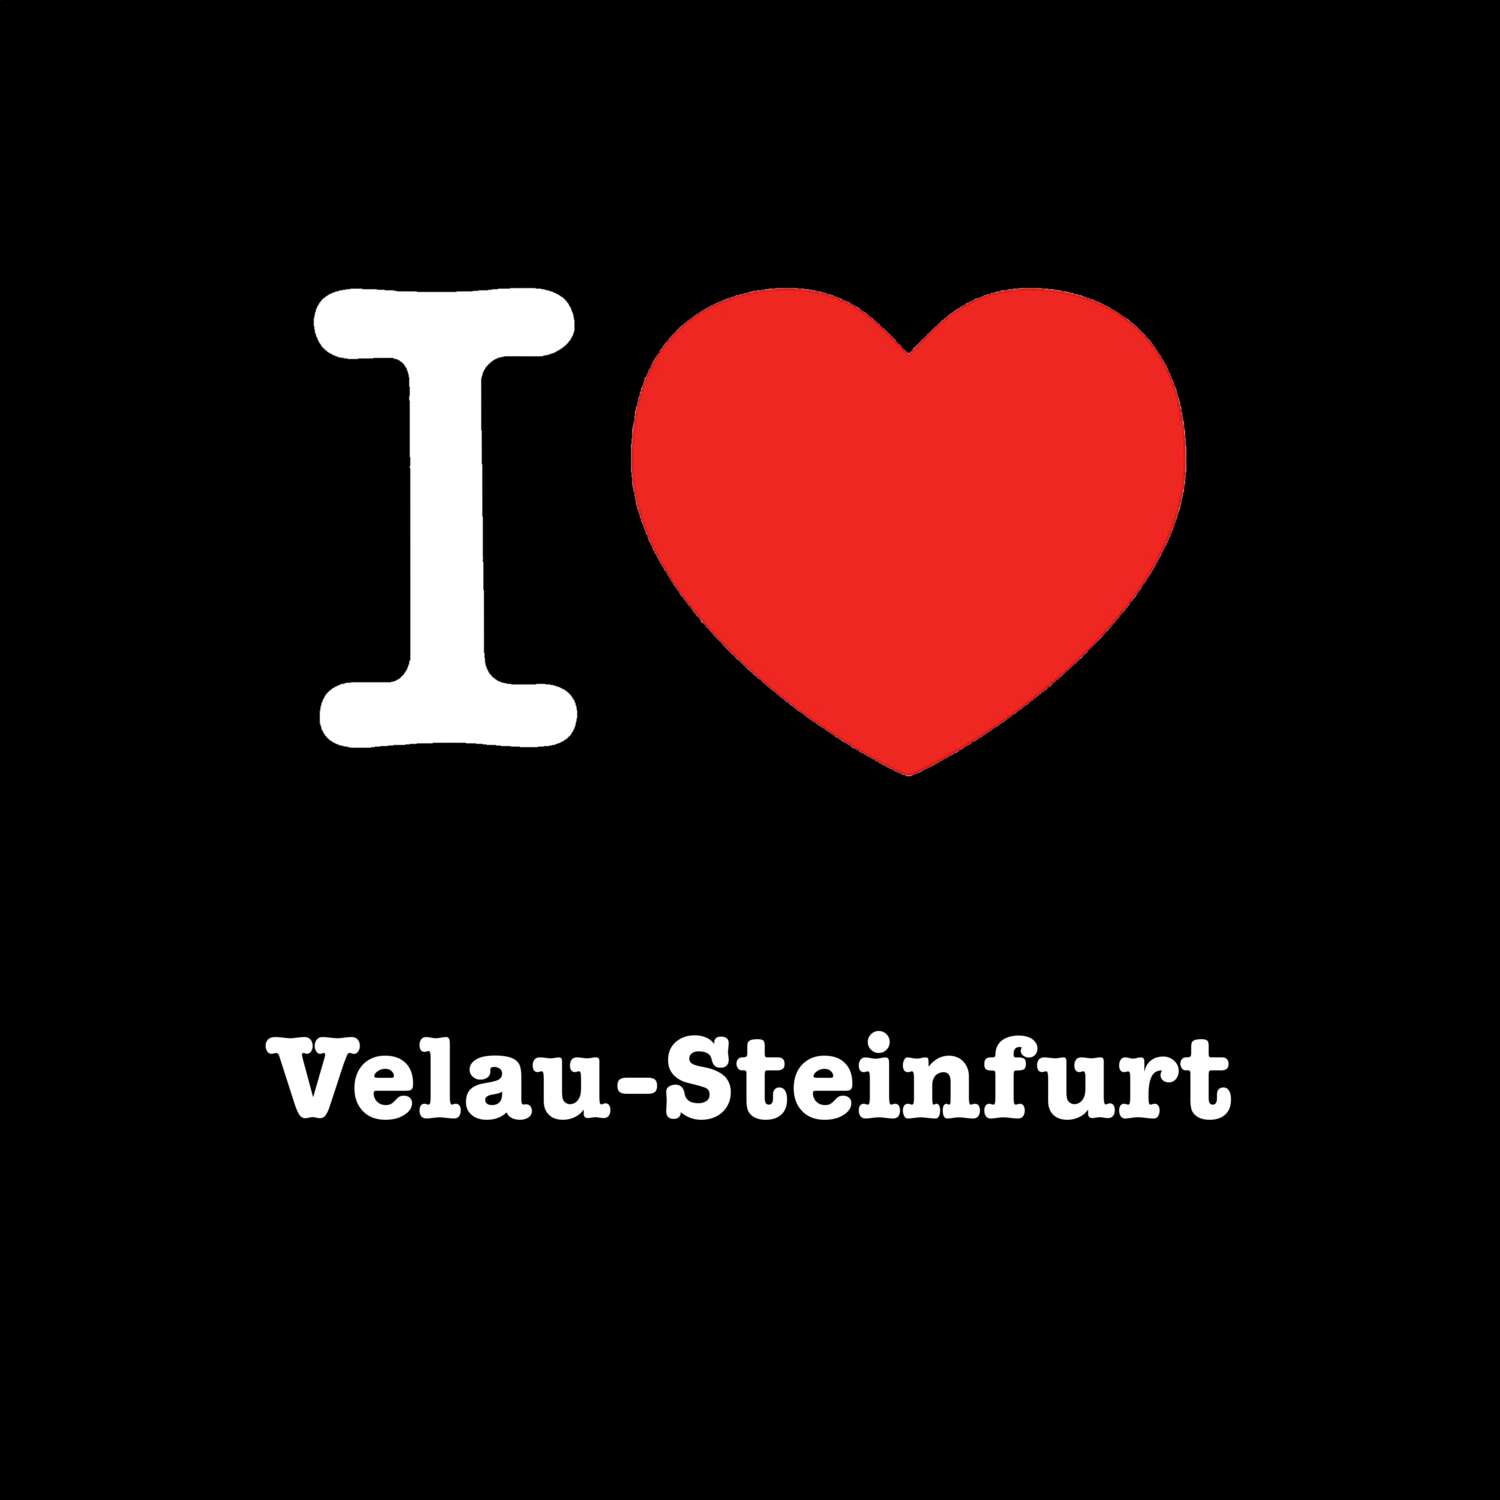 Velau-Steinfurt T-Shirt »I love«